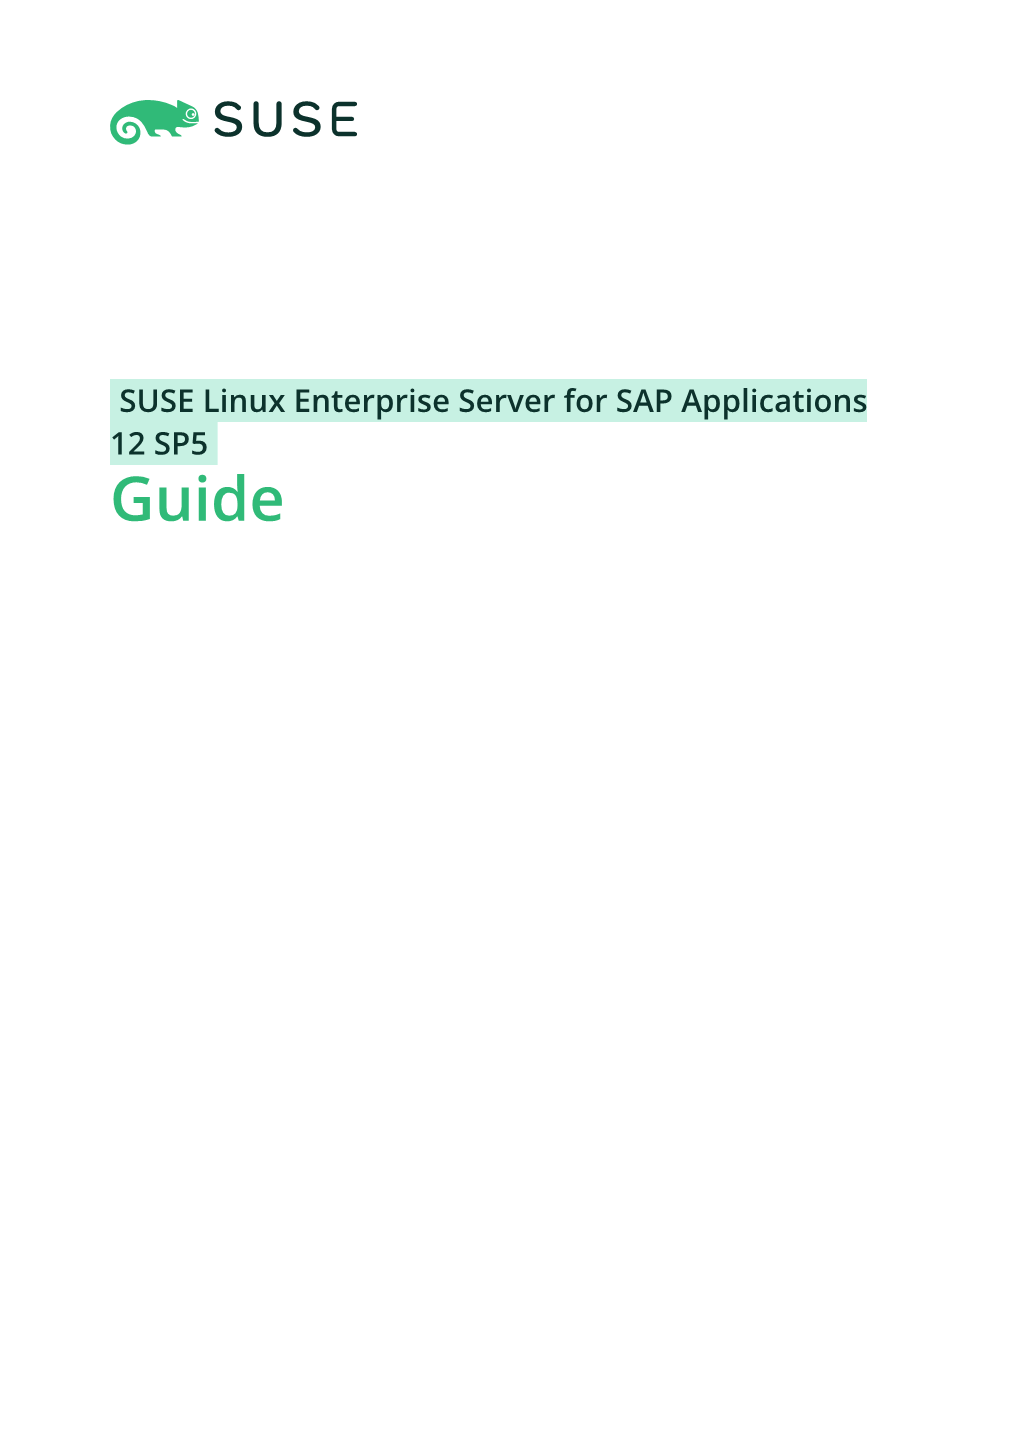 SUSE Linux Enterprise Server for SAP Applications 12 SP5 Guide Guide SUSE Linux Enterprise Server for SAP Applications 12 SP5